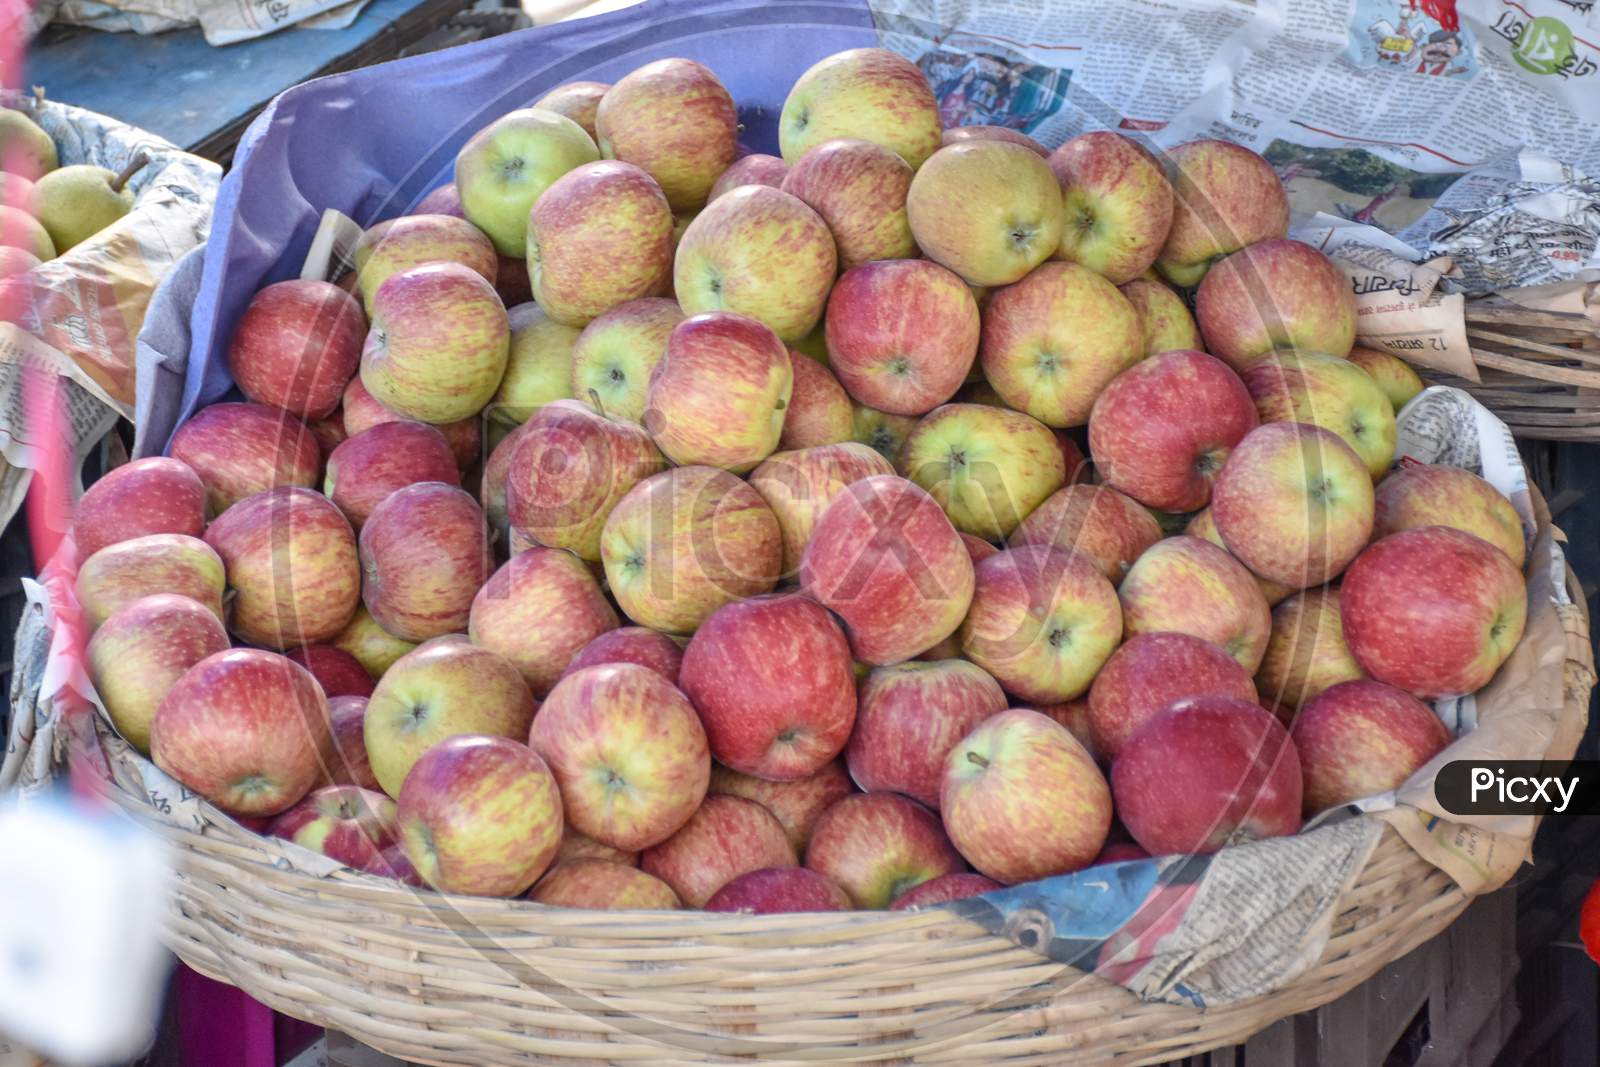 Apple Fruit On Sale In The Market Patuli Floating Market, Kolkata, India